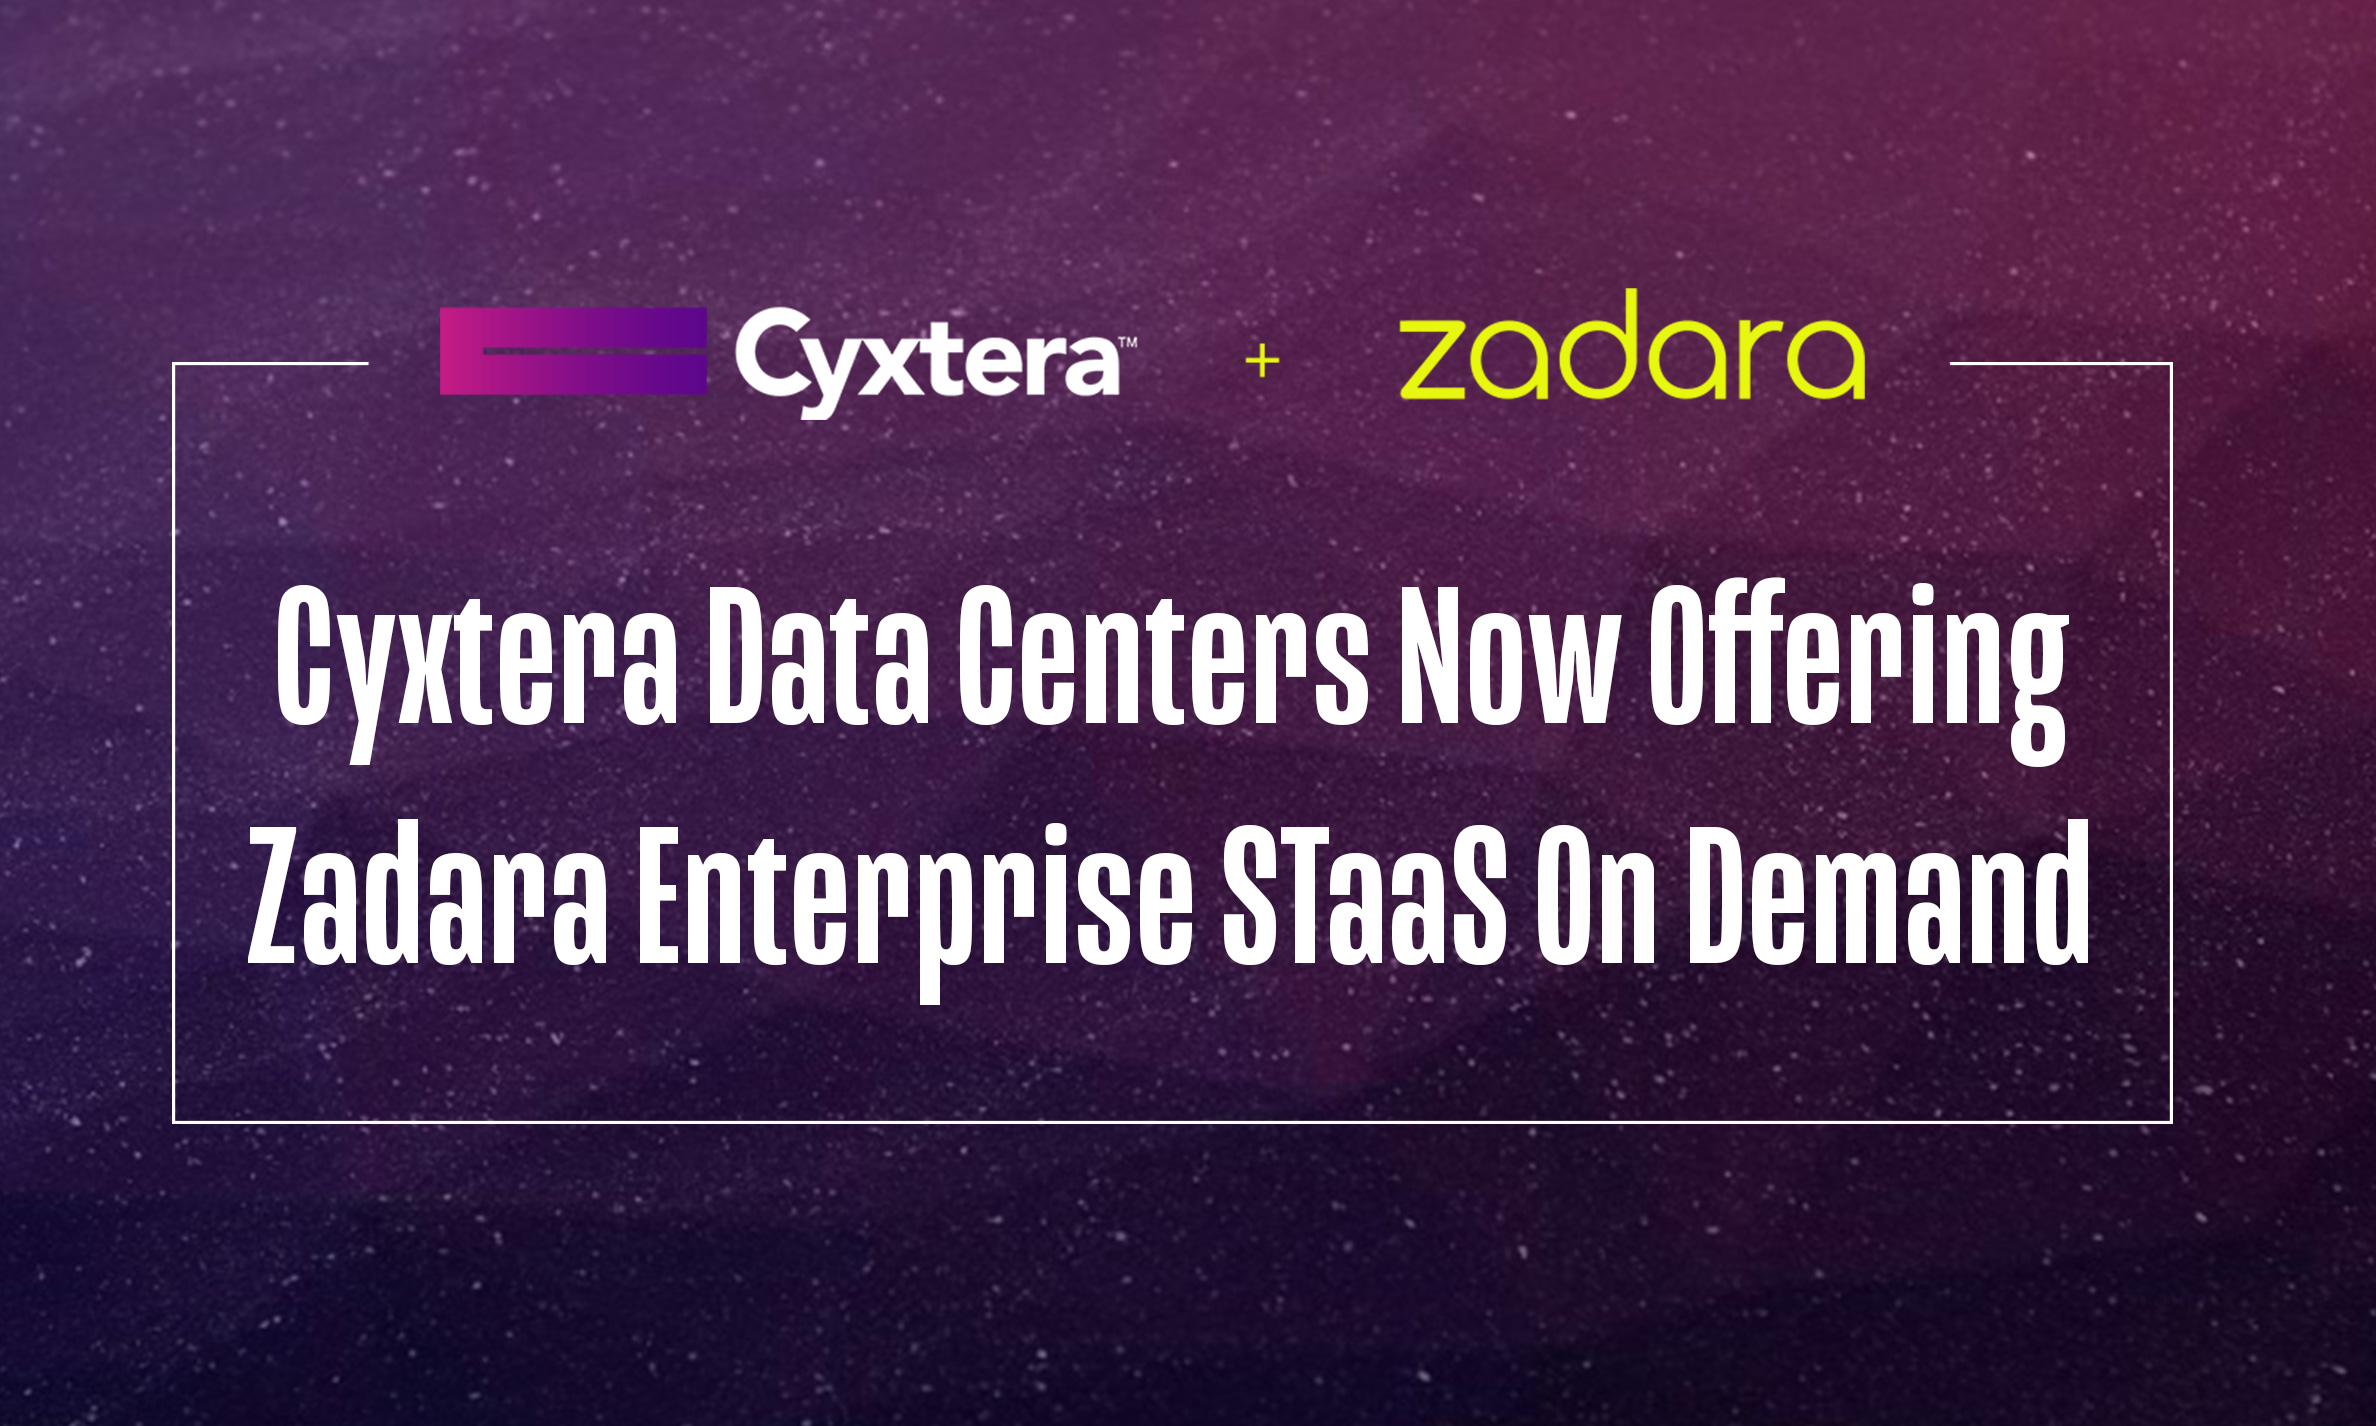 Cyxtera Data Centers Now Offering Zadara Enterprise Storage as a Service On Demand